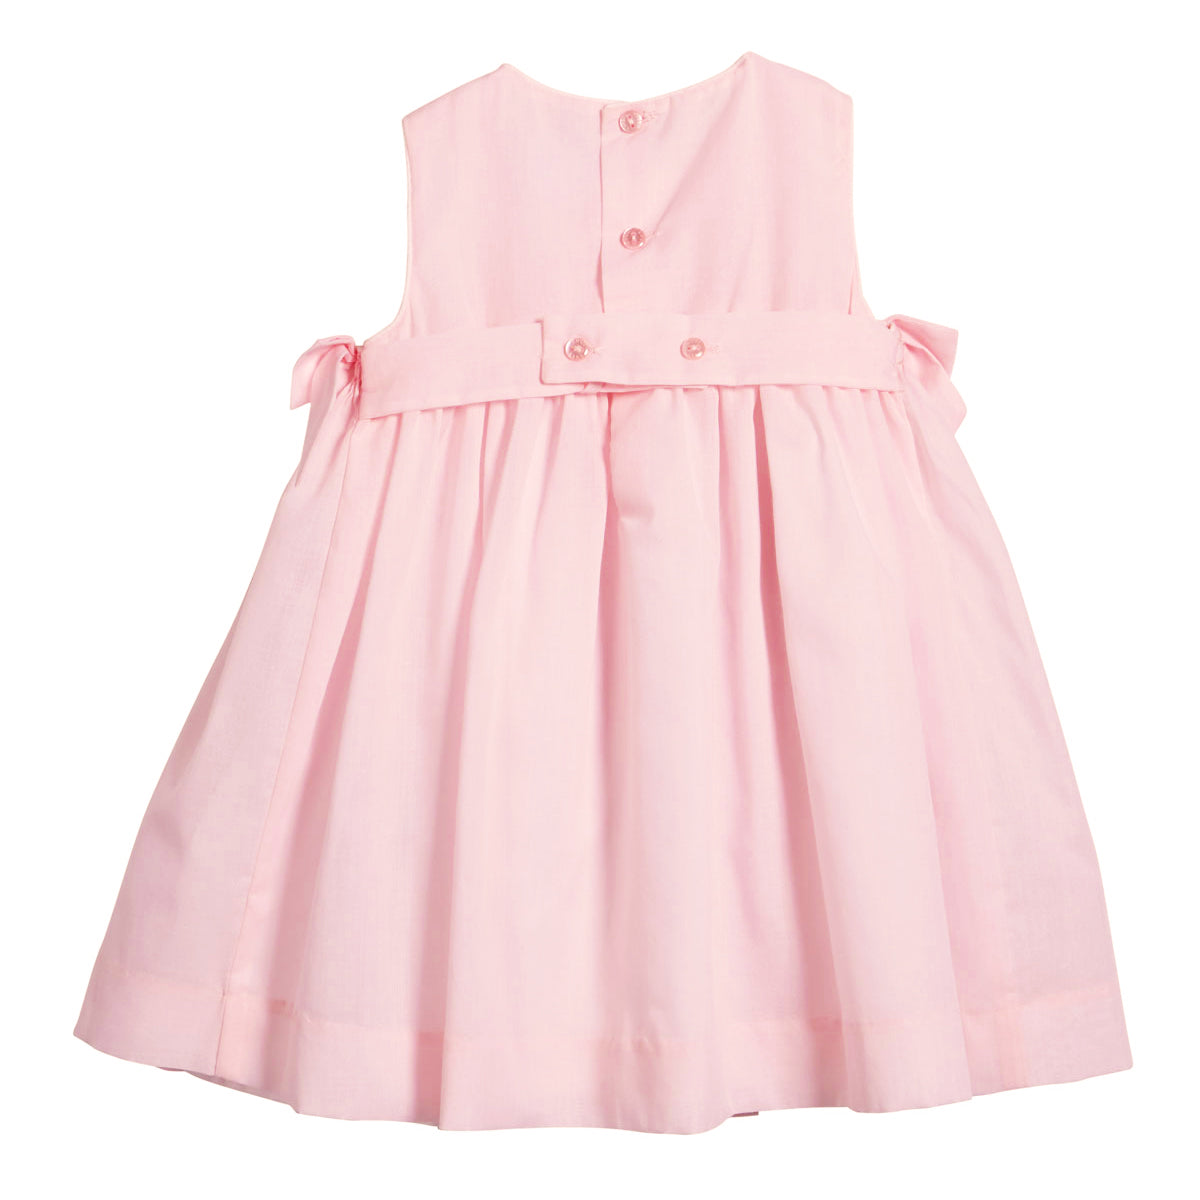 Pink Rosebud Smocked Dress with Side Bows